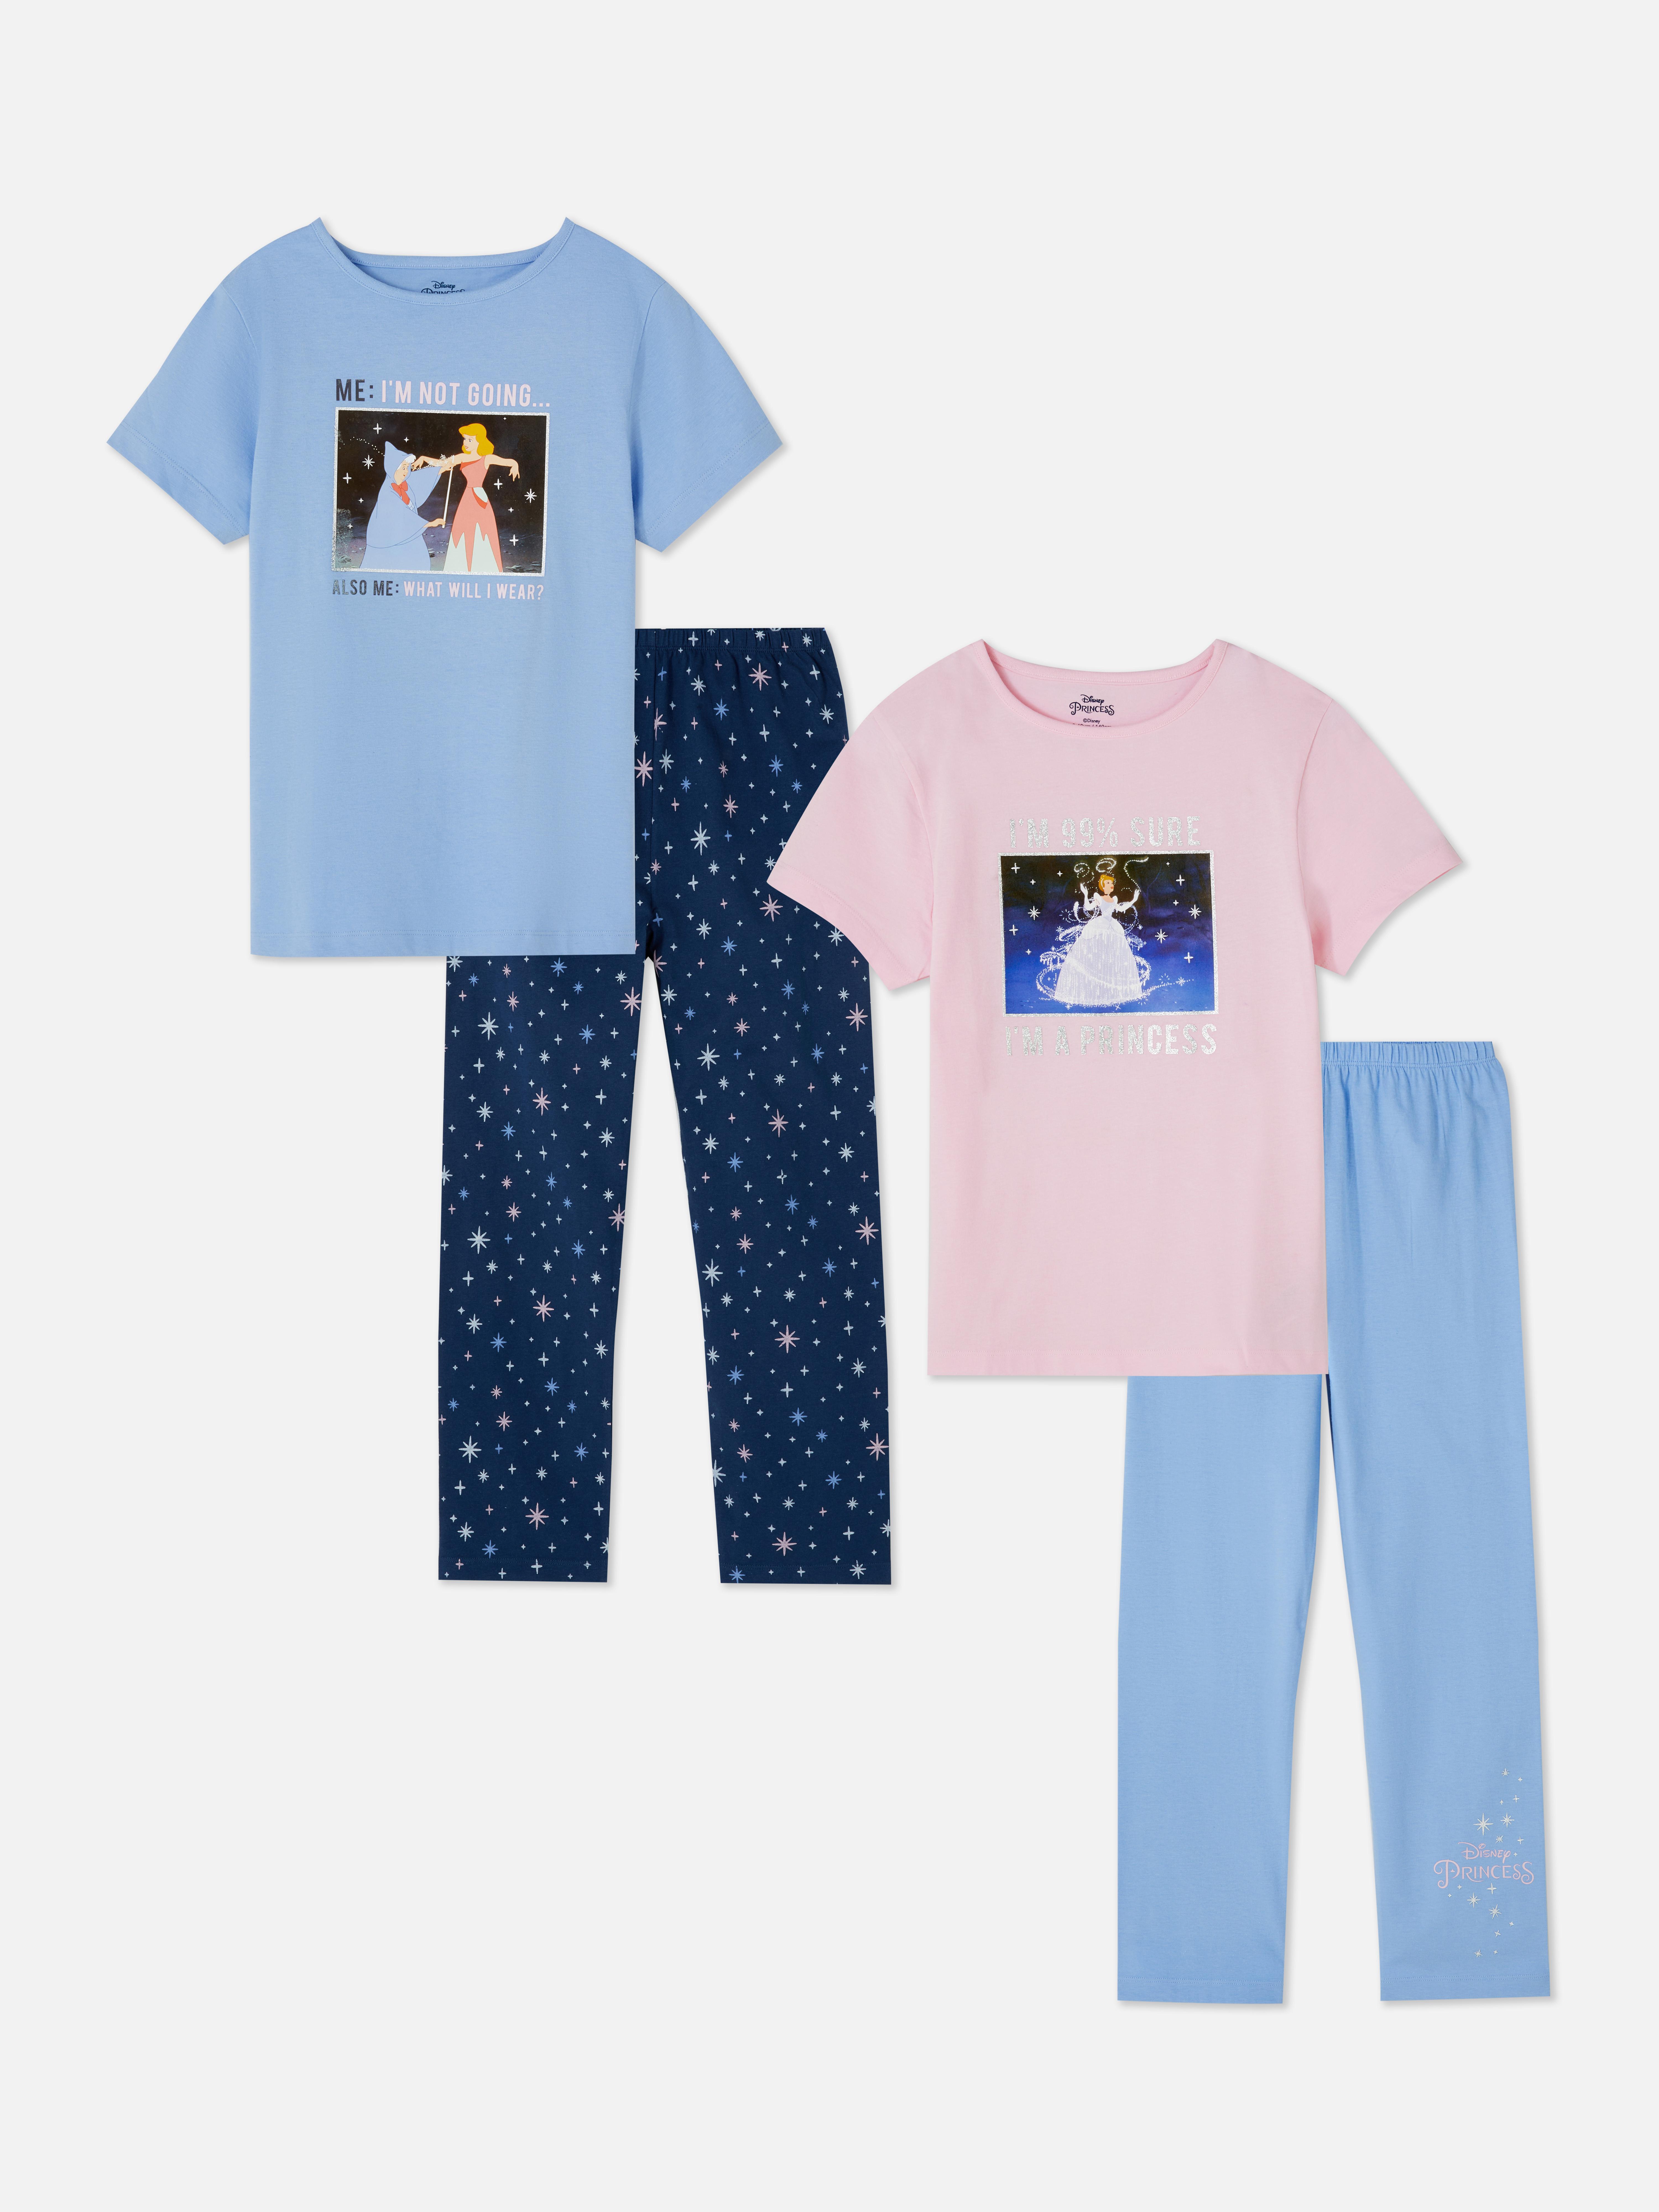 Disney's Cotton Pyjama Matching Set